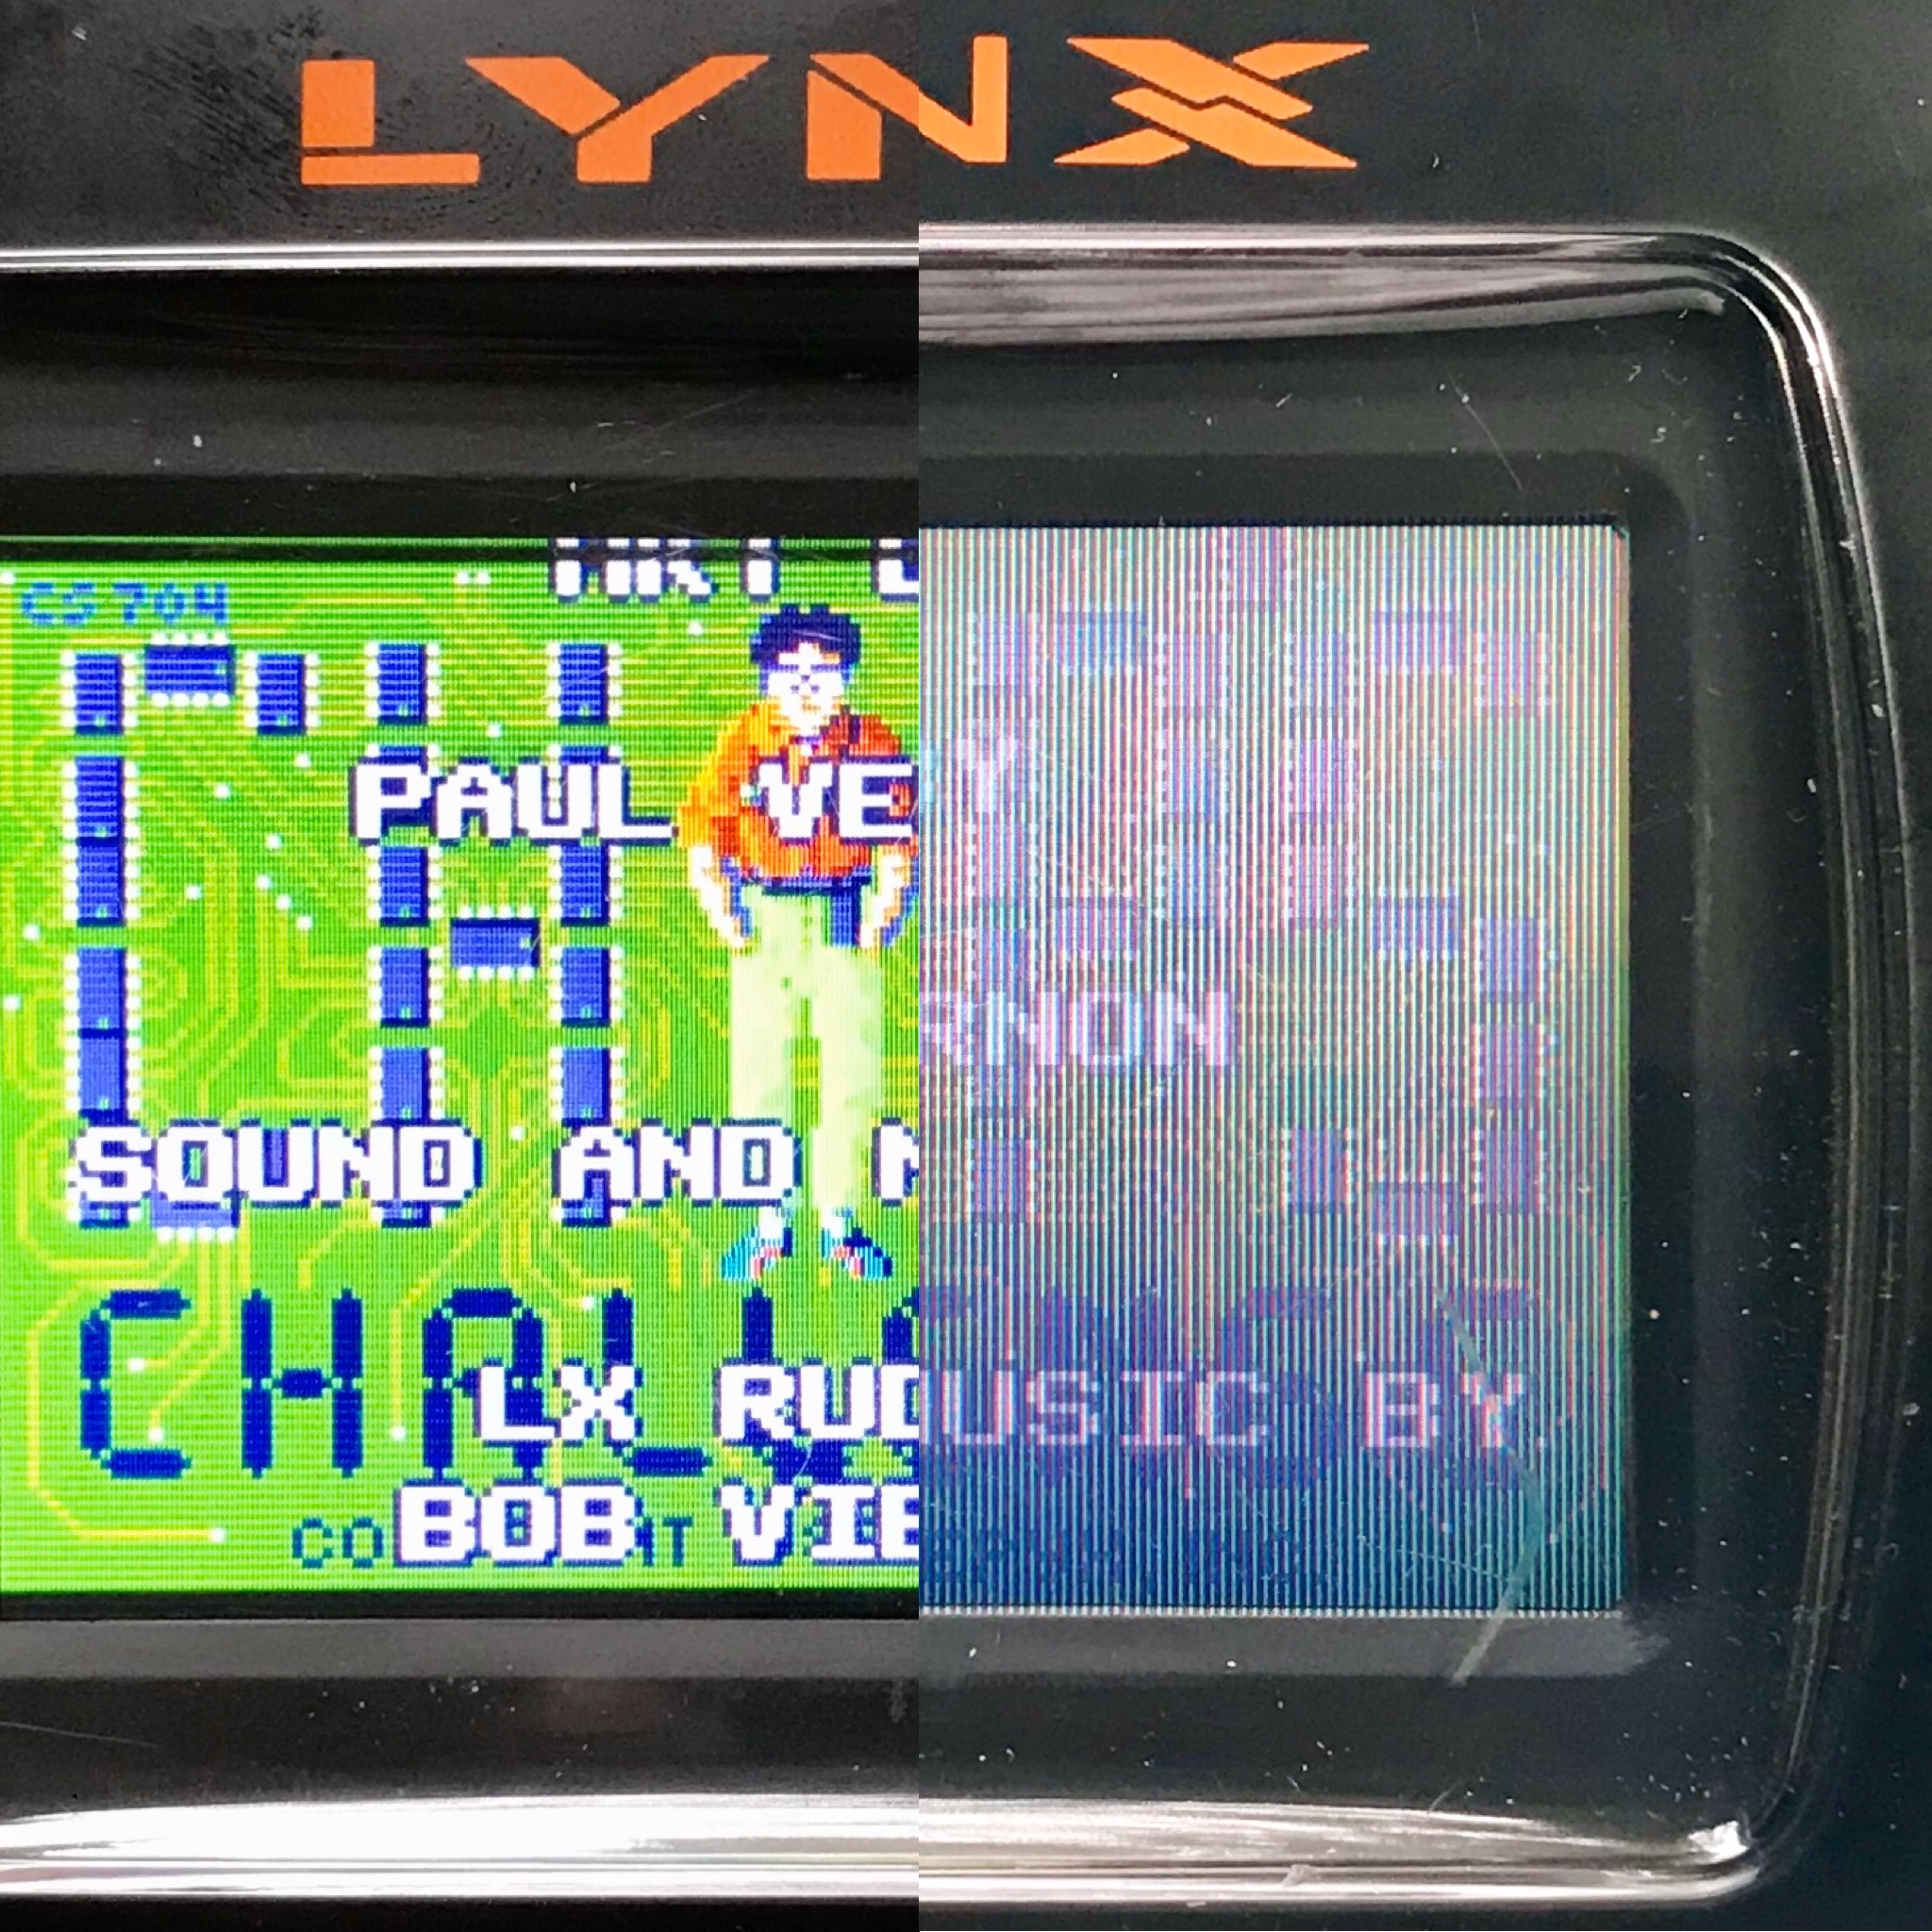 Comparison of BennVenn aftermarket Atari Lynx screen versus the OEM original